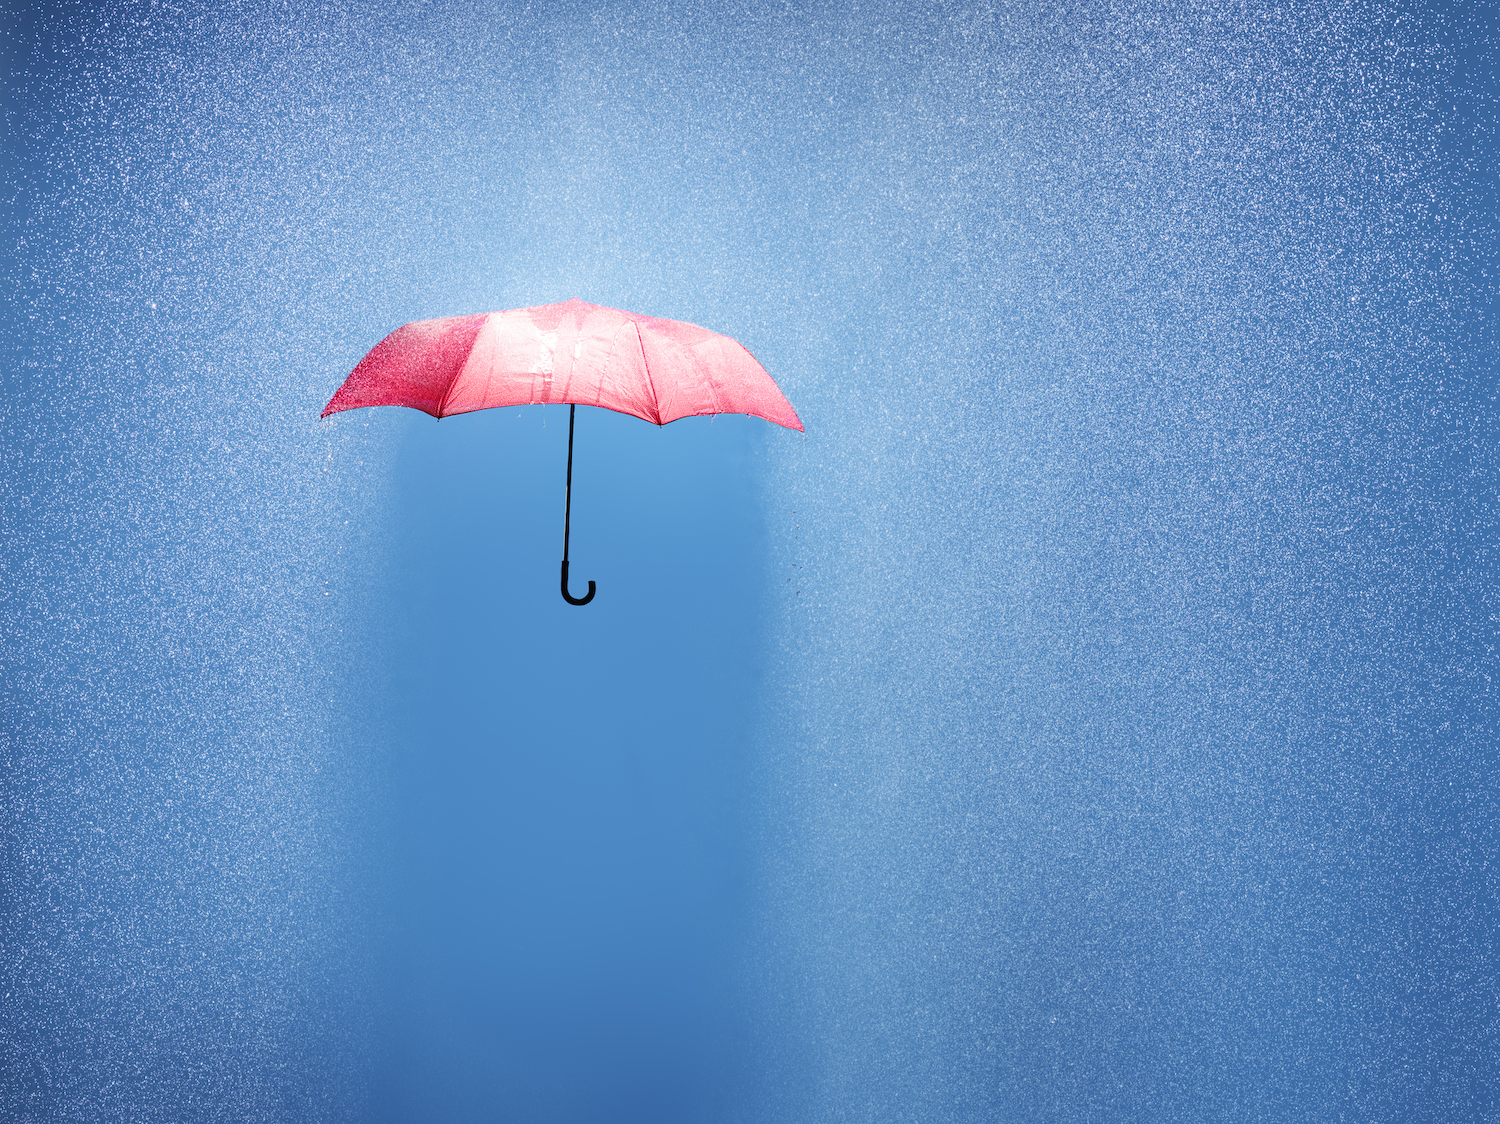 pink umbrella in the rain, photographed conceptually